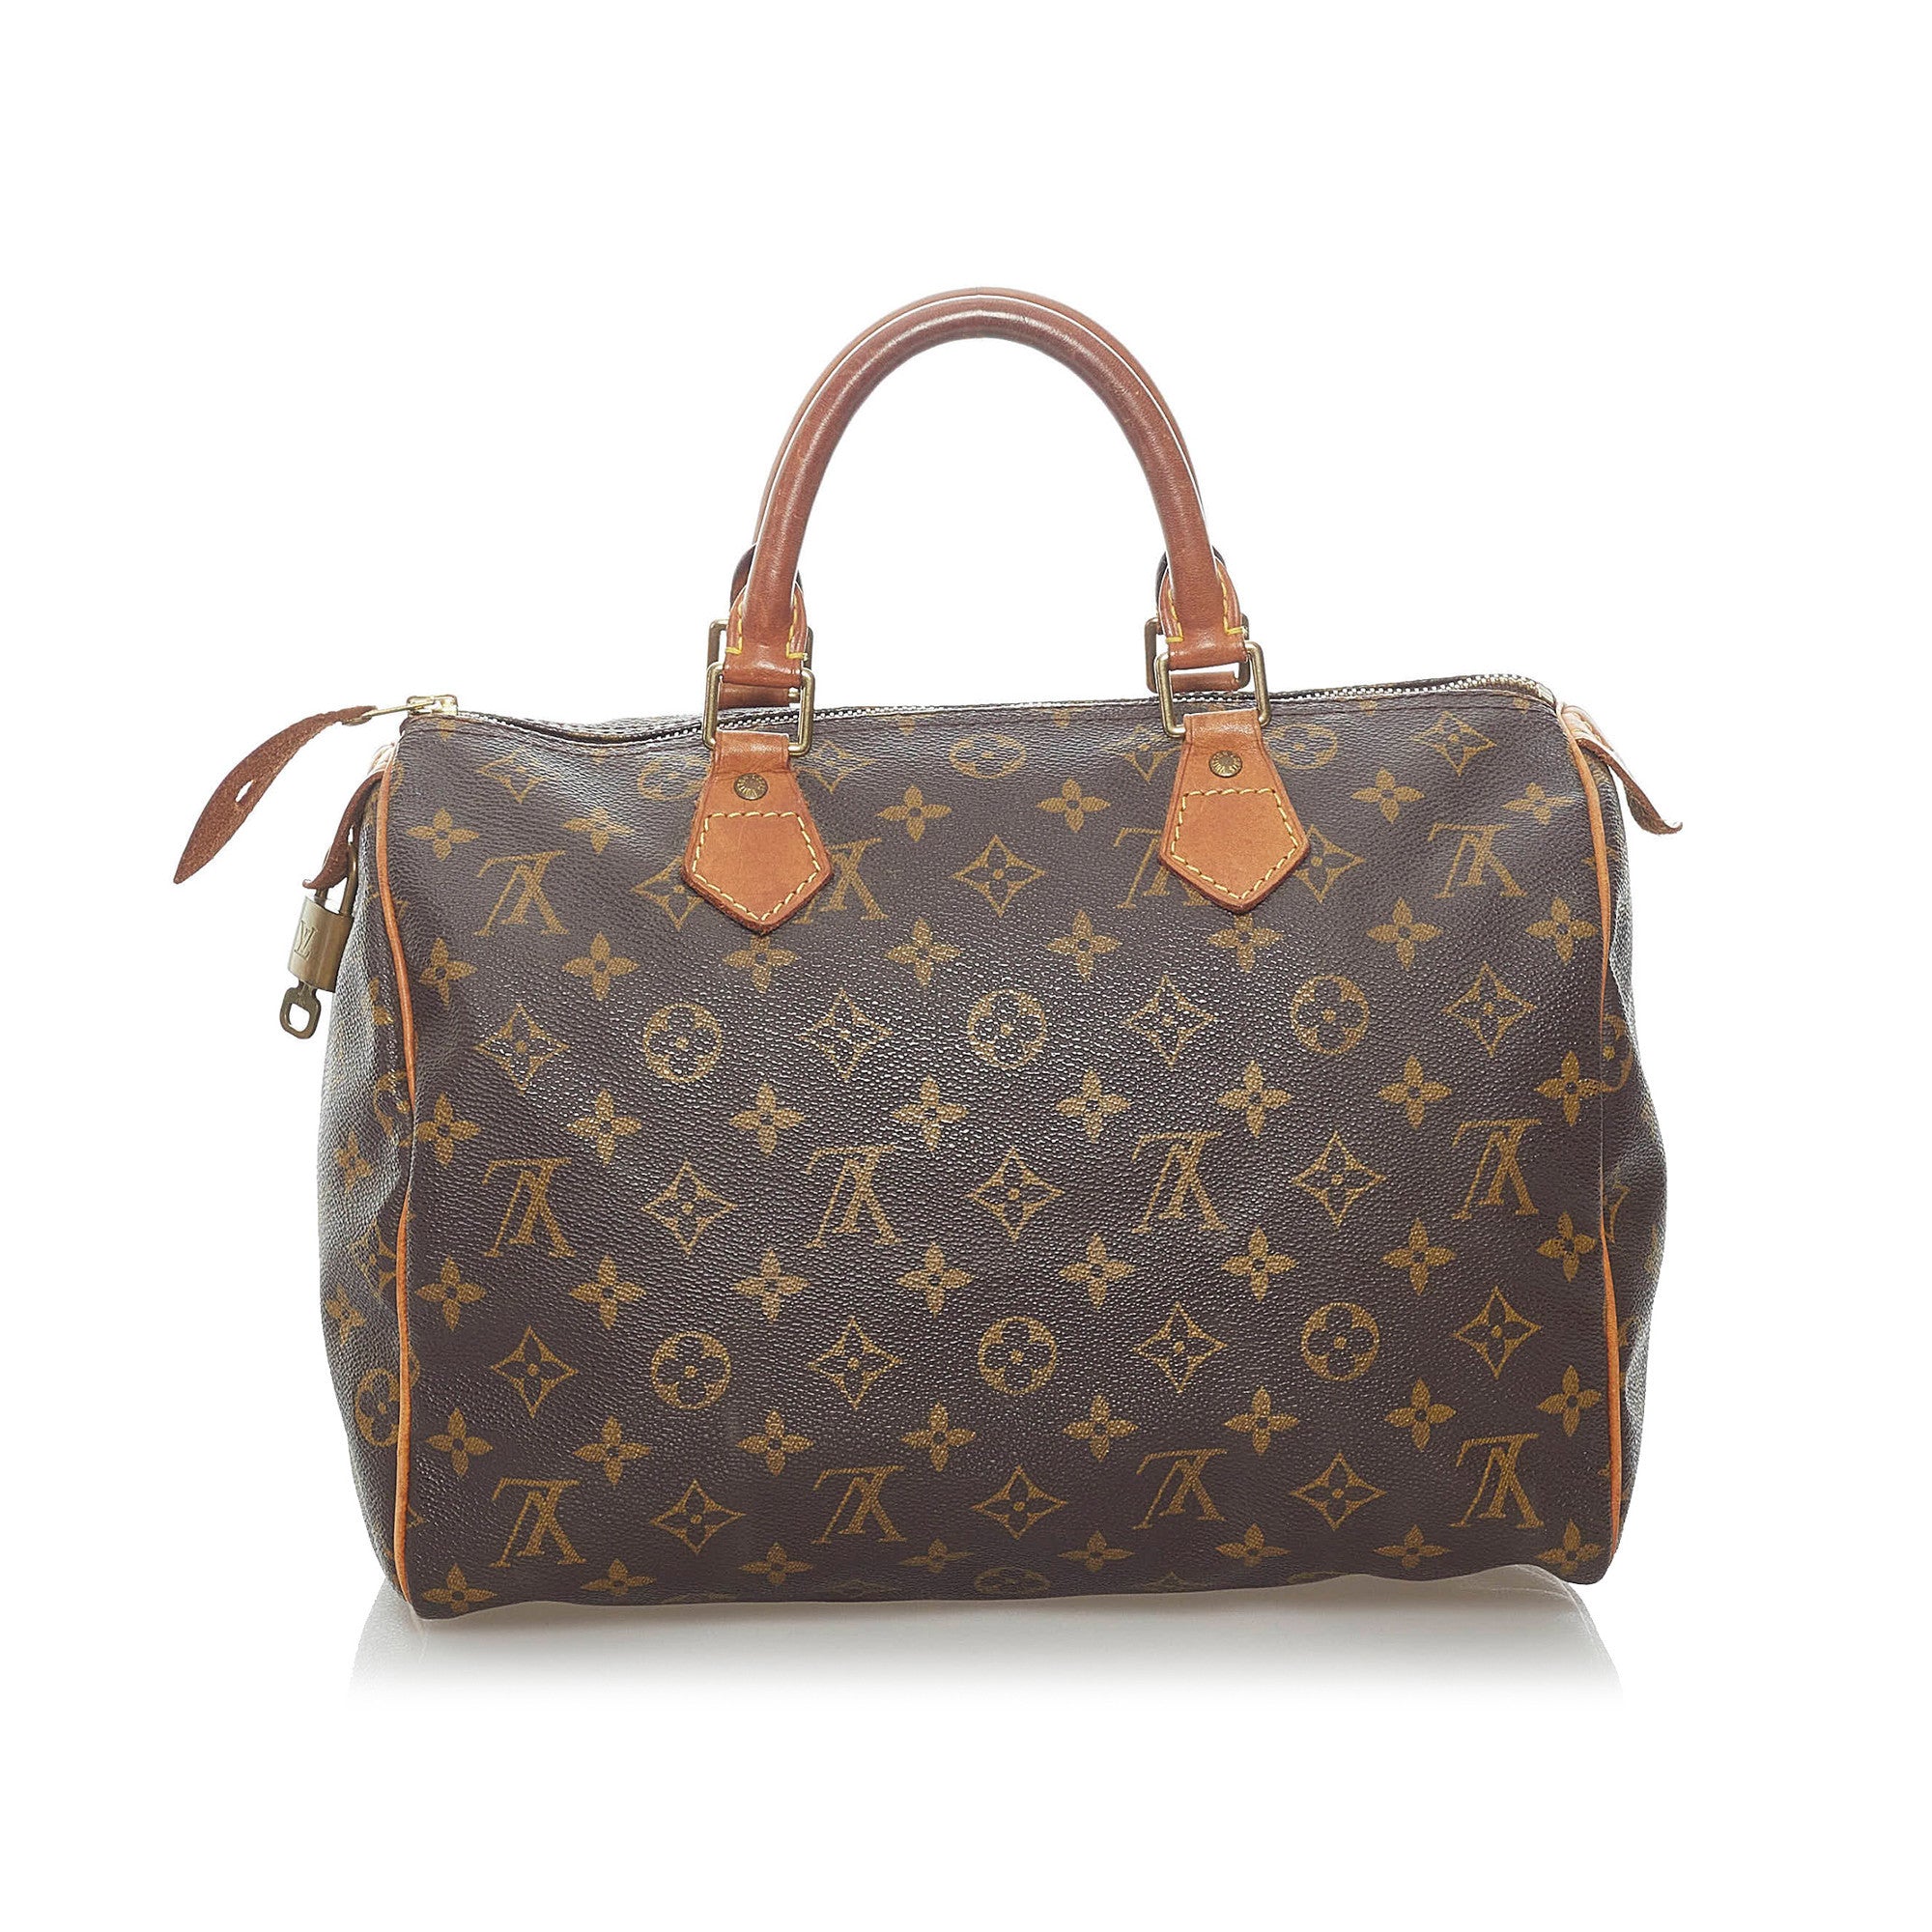 Louis Vuitton Speedy 30 Duffle Bag